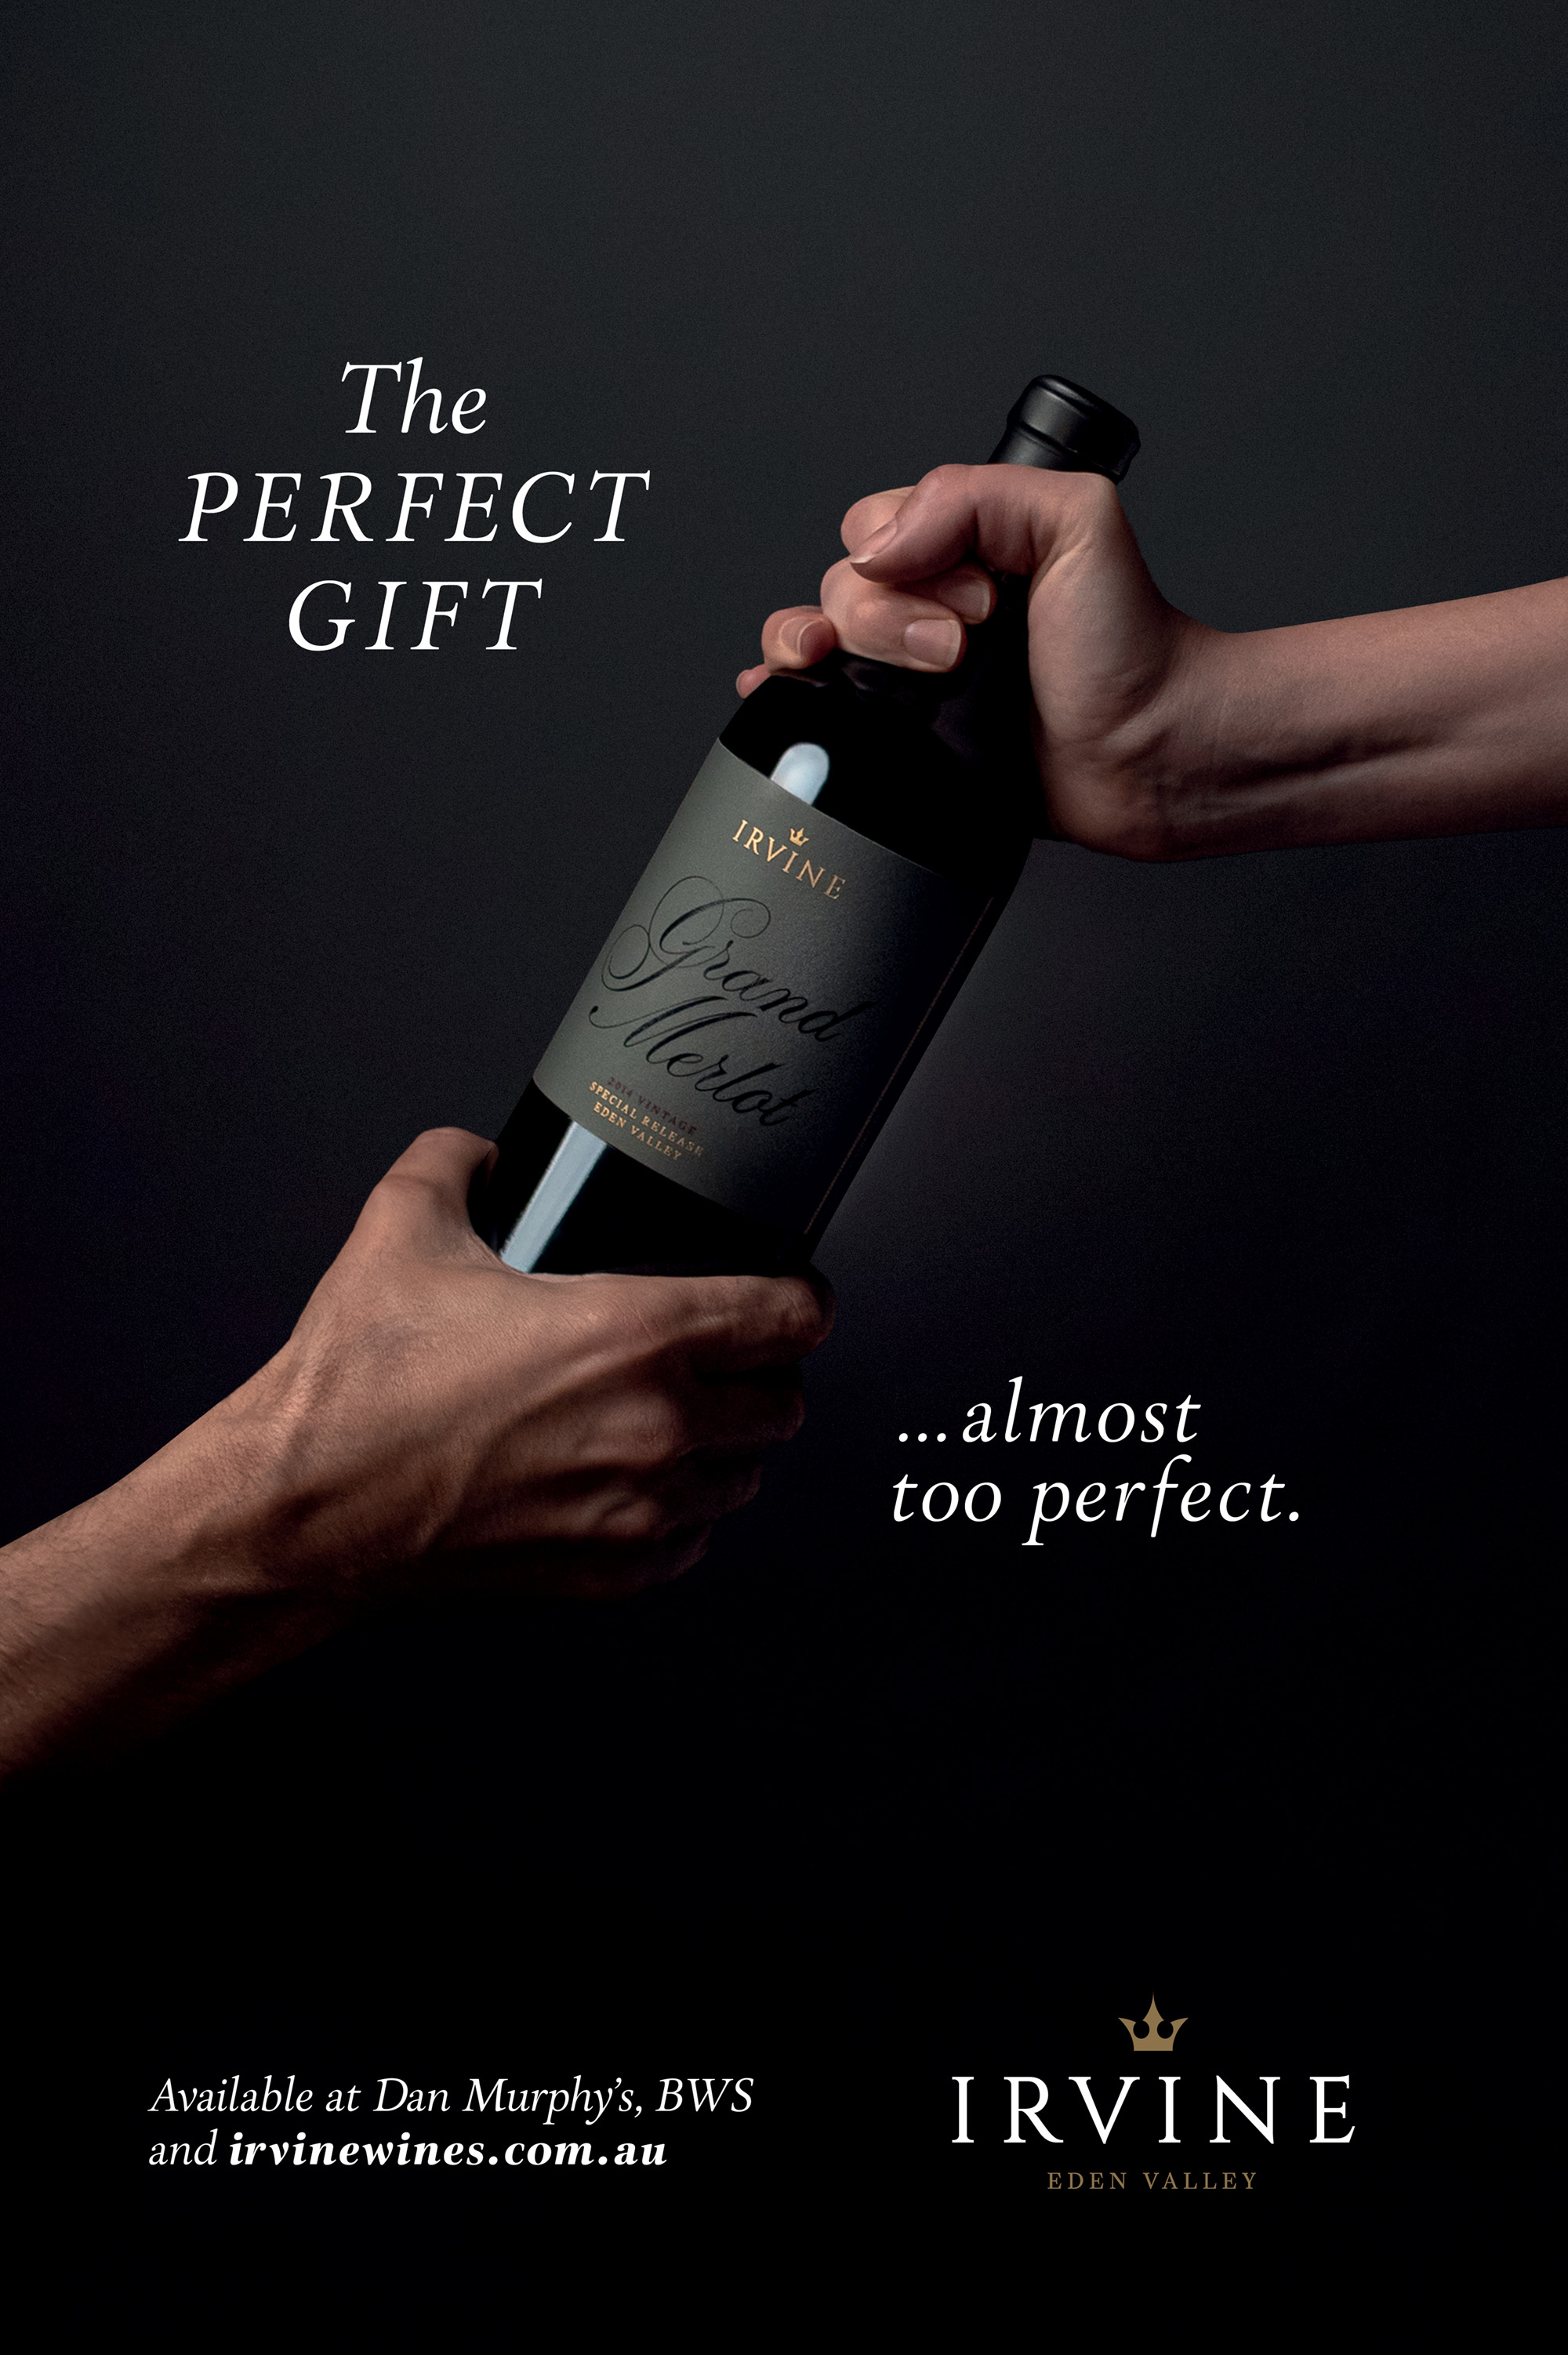 Irvine wine poster with hands on wine